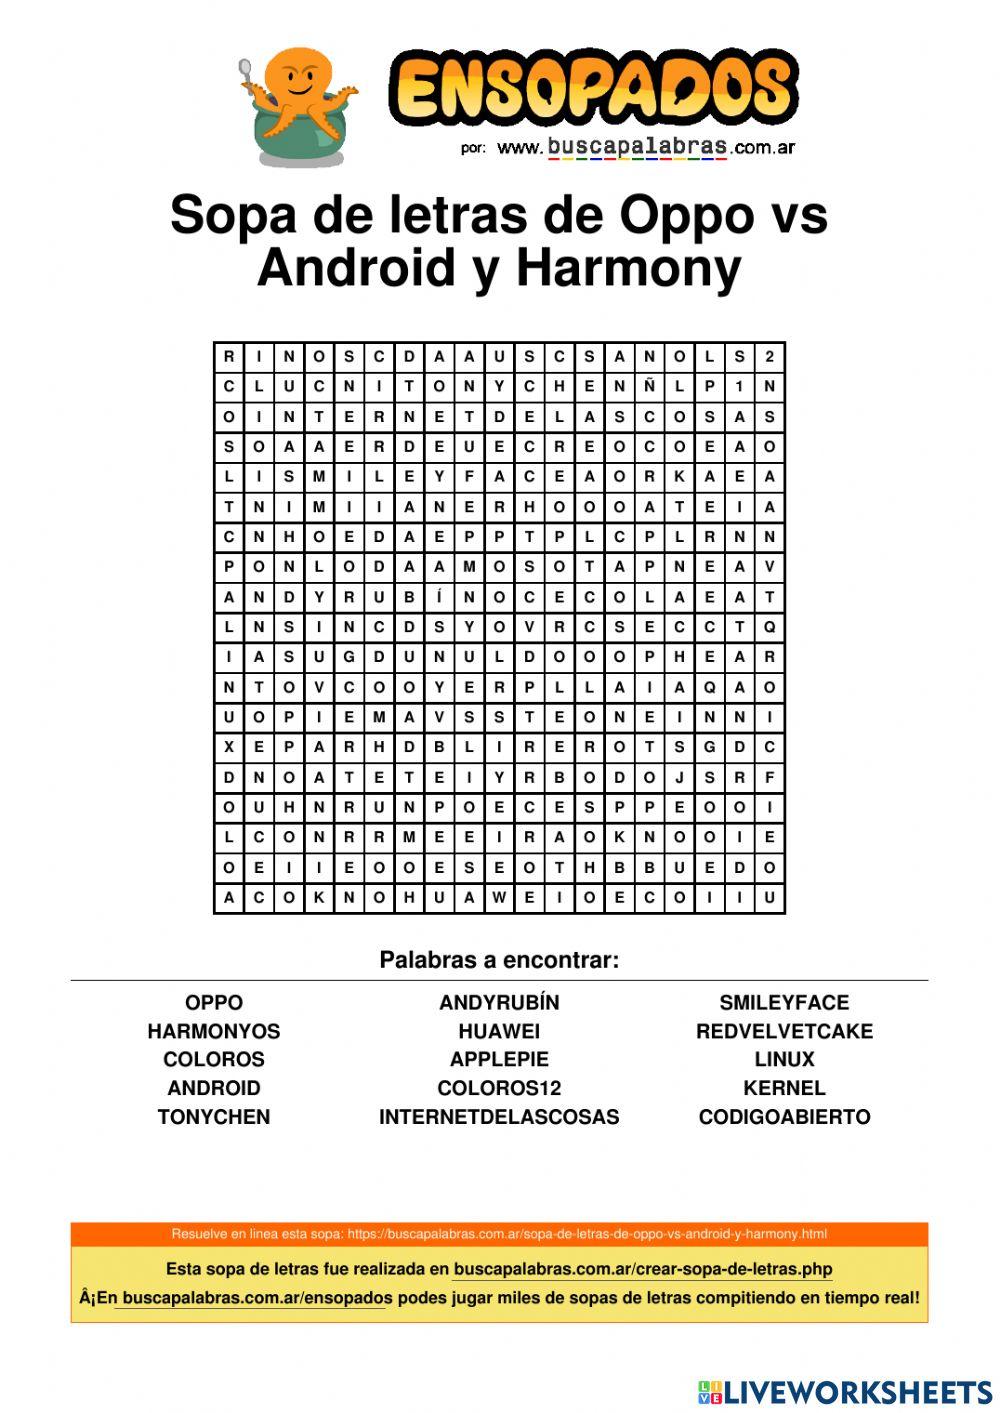 Oppo vs Android y Harmony